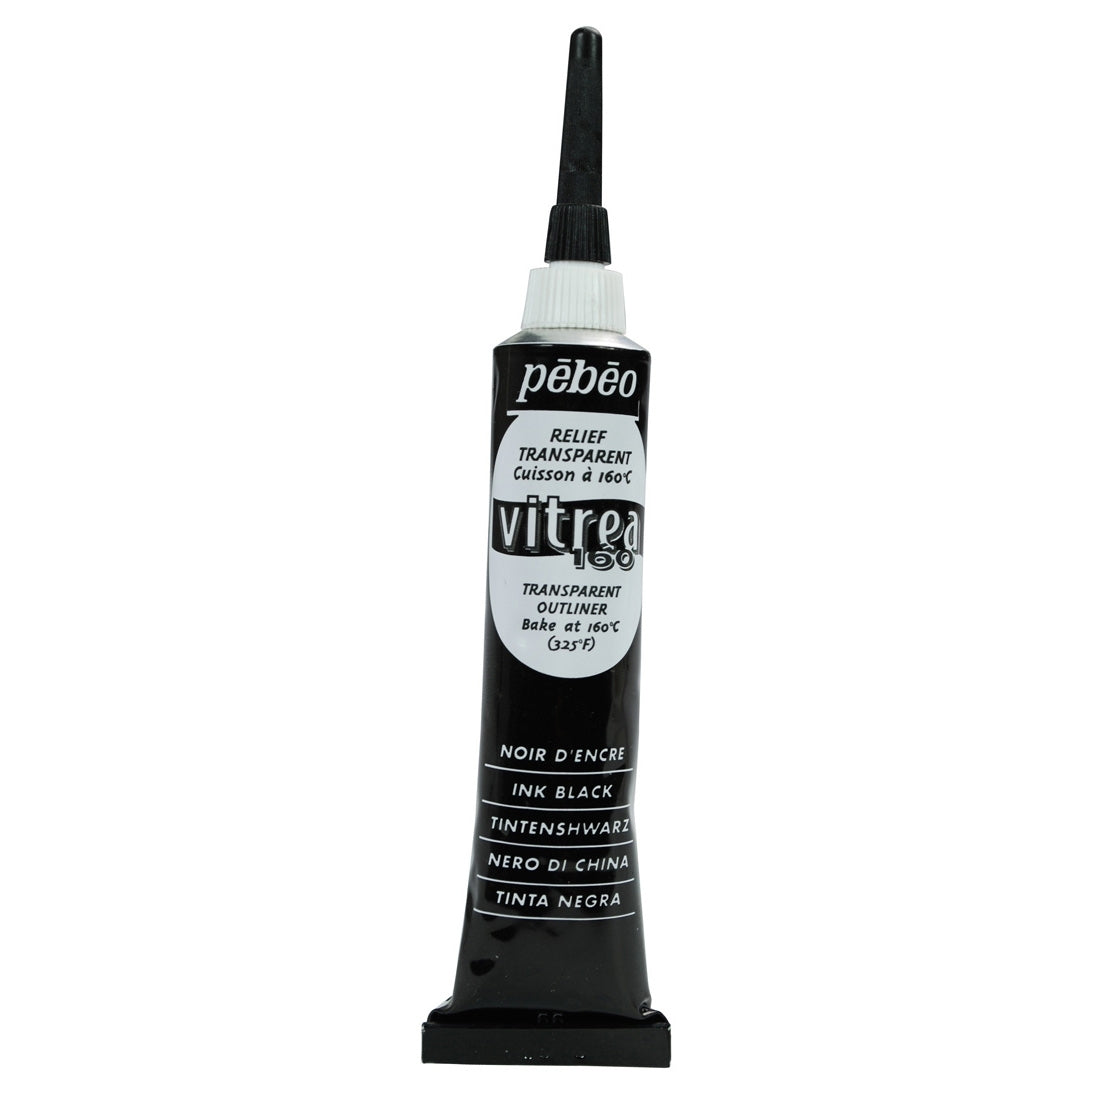 Pebeo - Vitrea 160 - Glas- und Fliesenfarbe - Gloss Outliner - Tinte Black 20ml